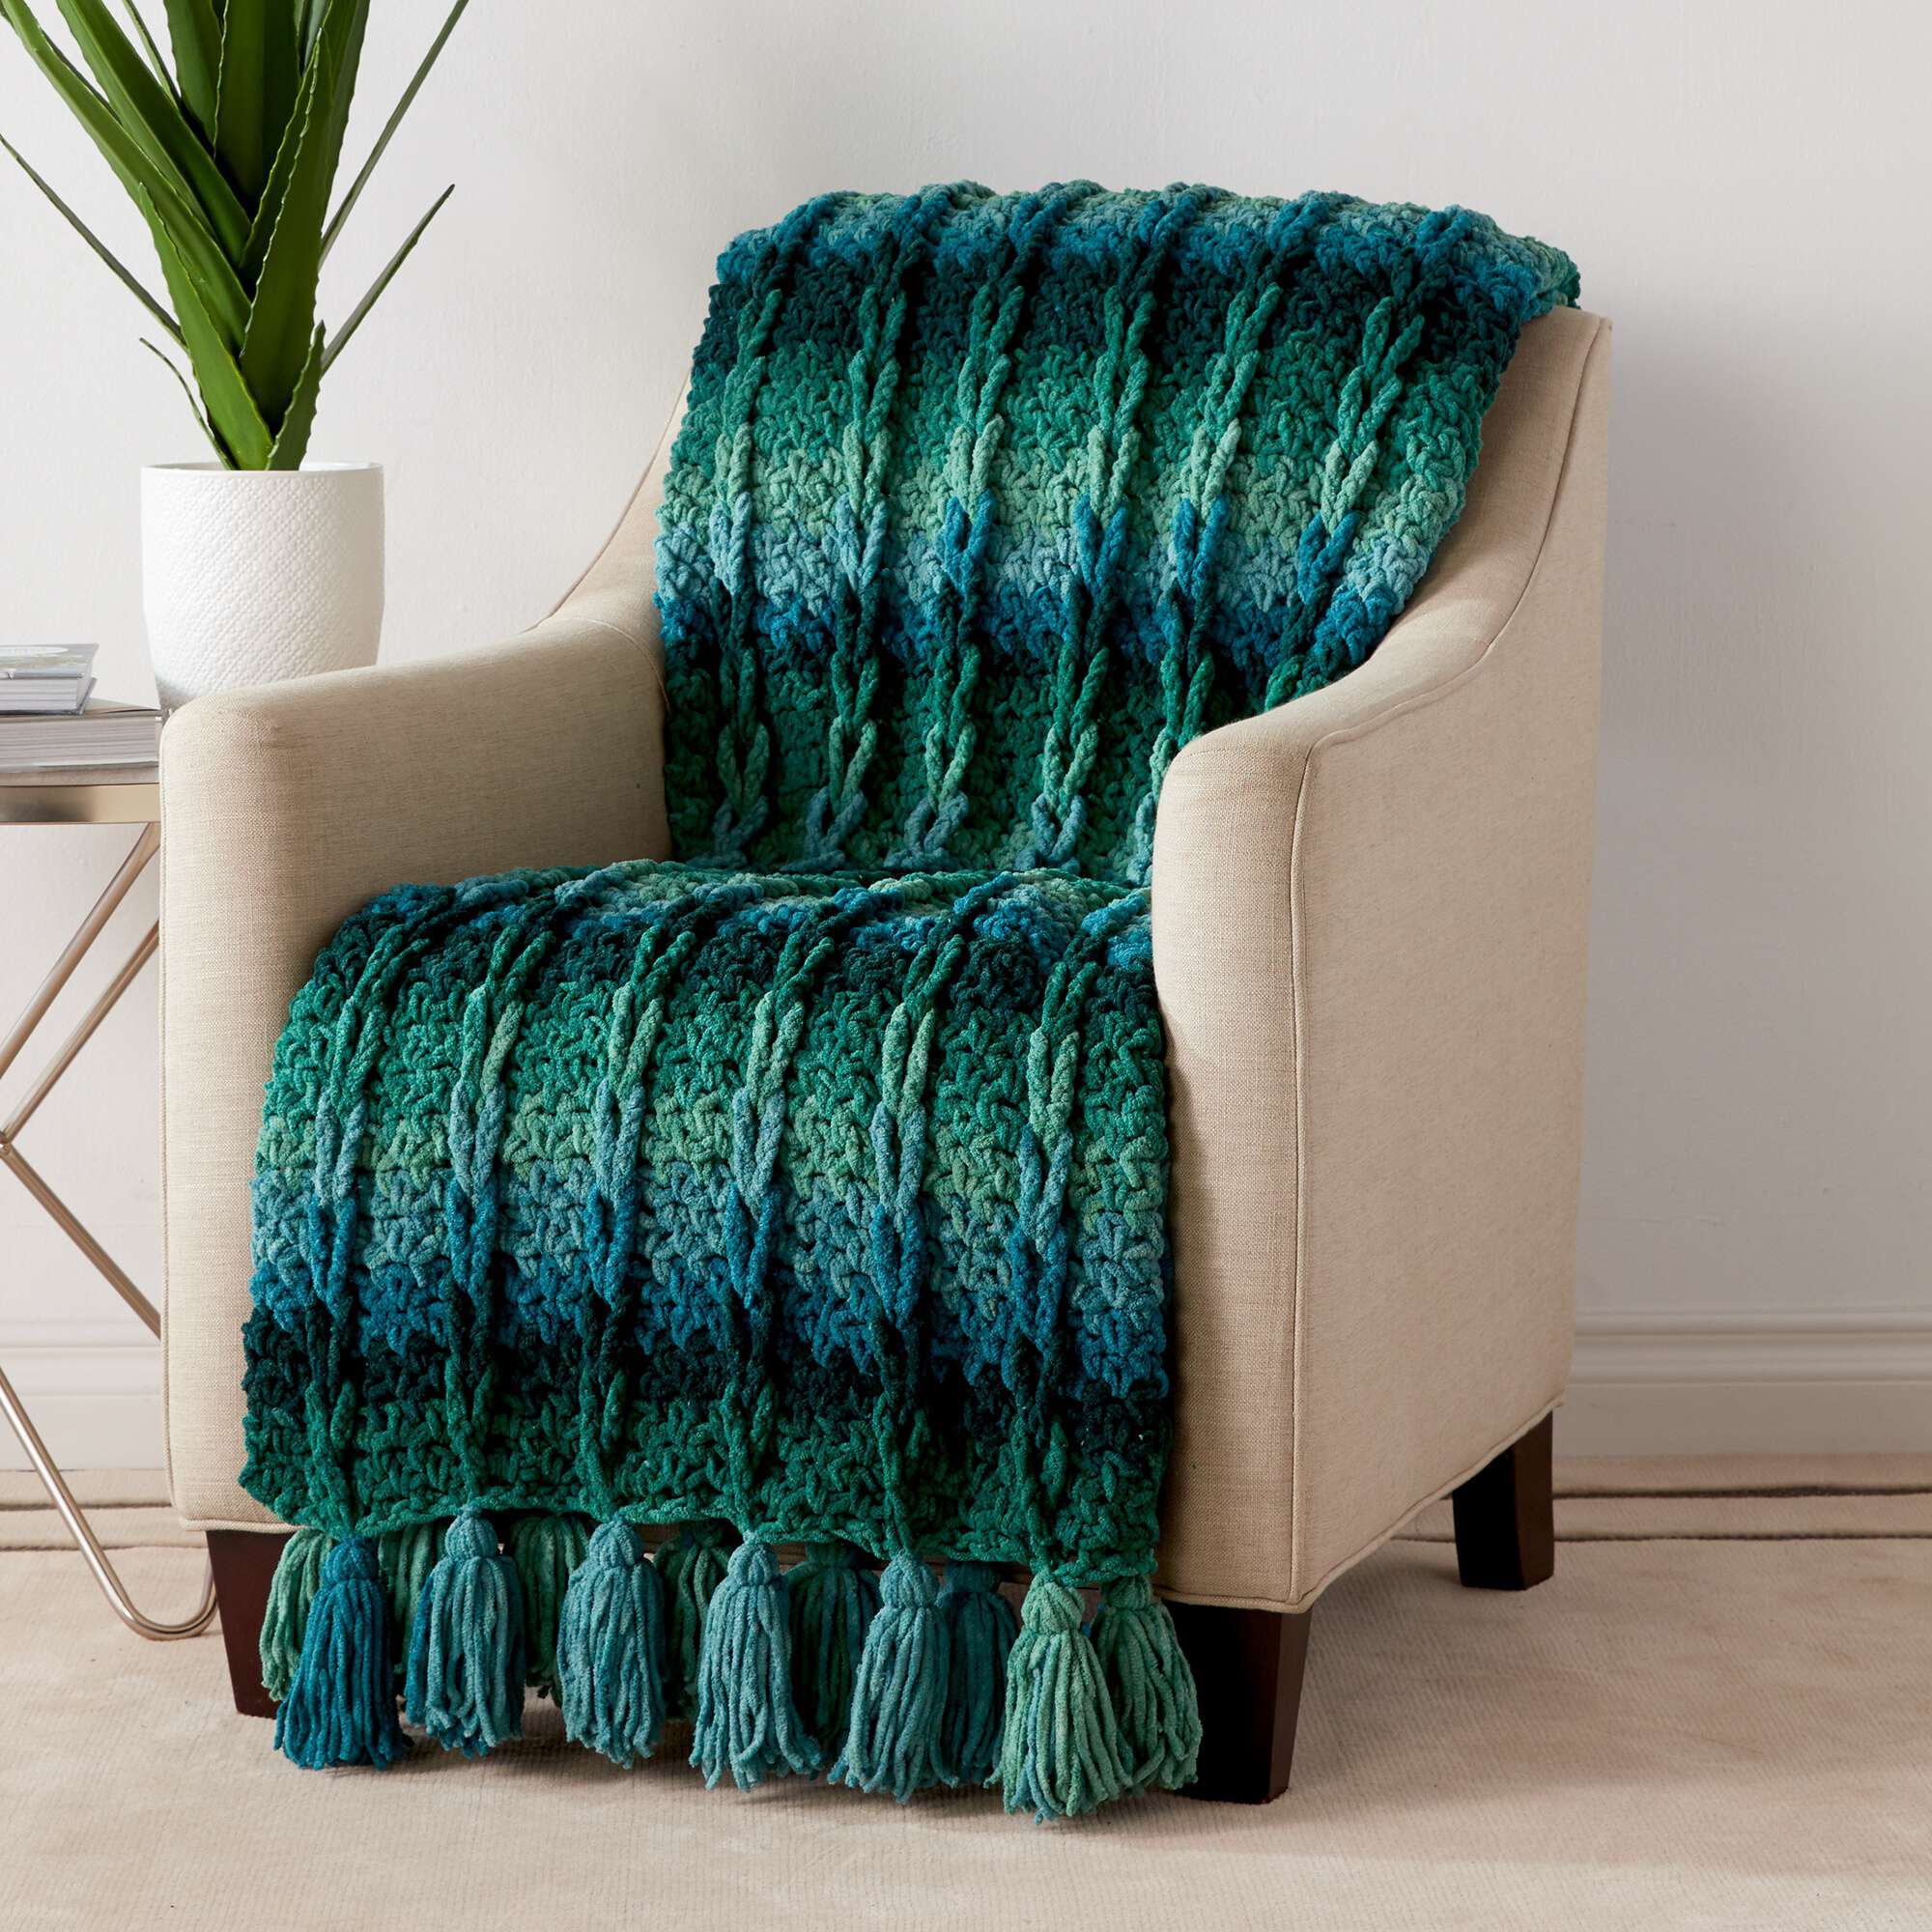 Bernat Mock Cable Crochet Blanket Pattern